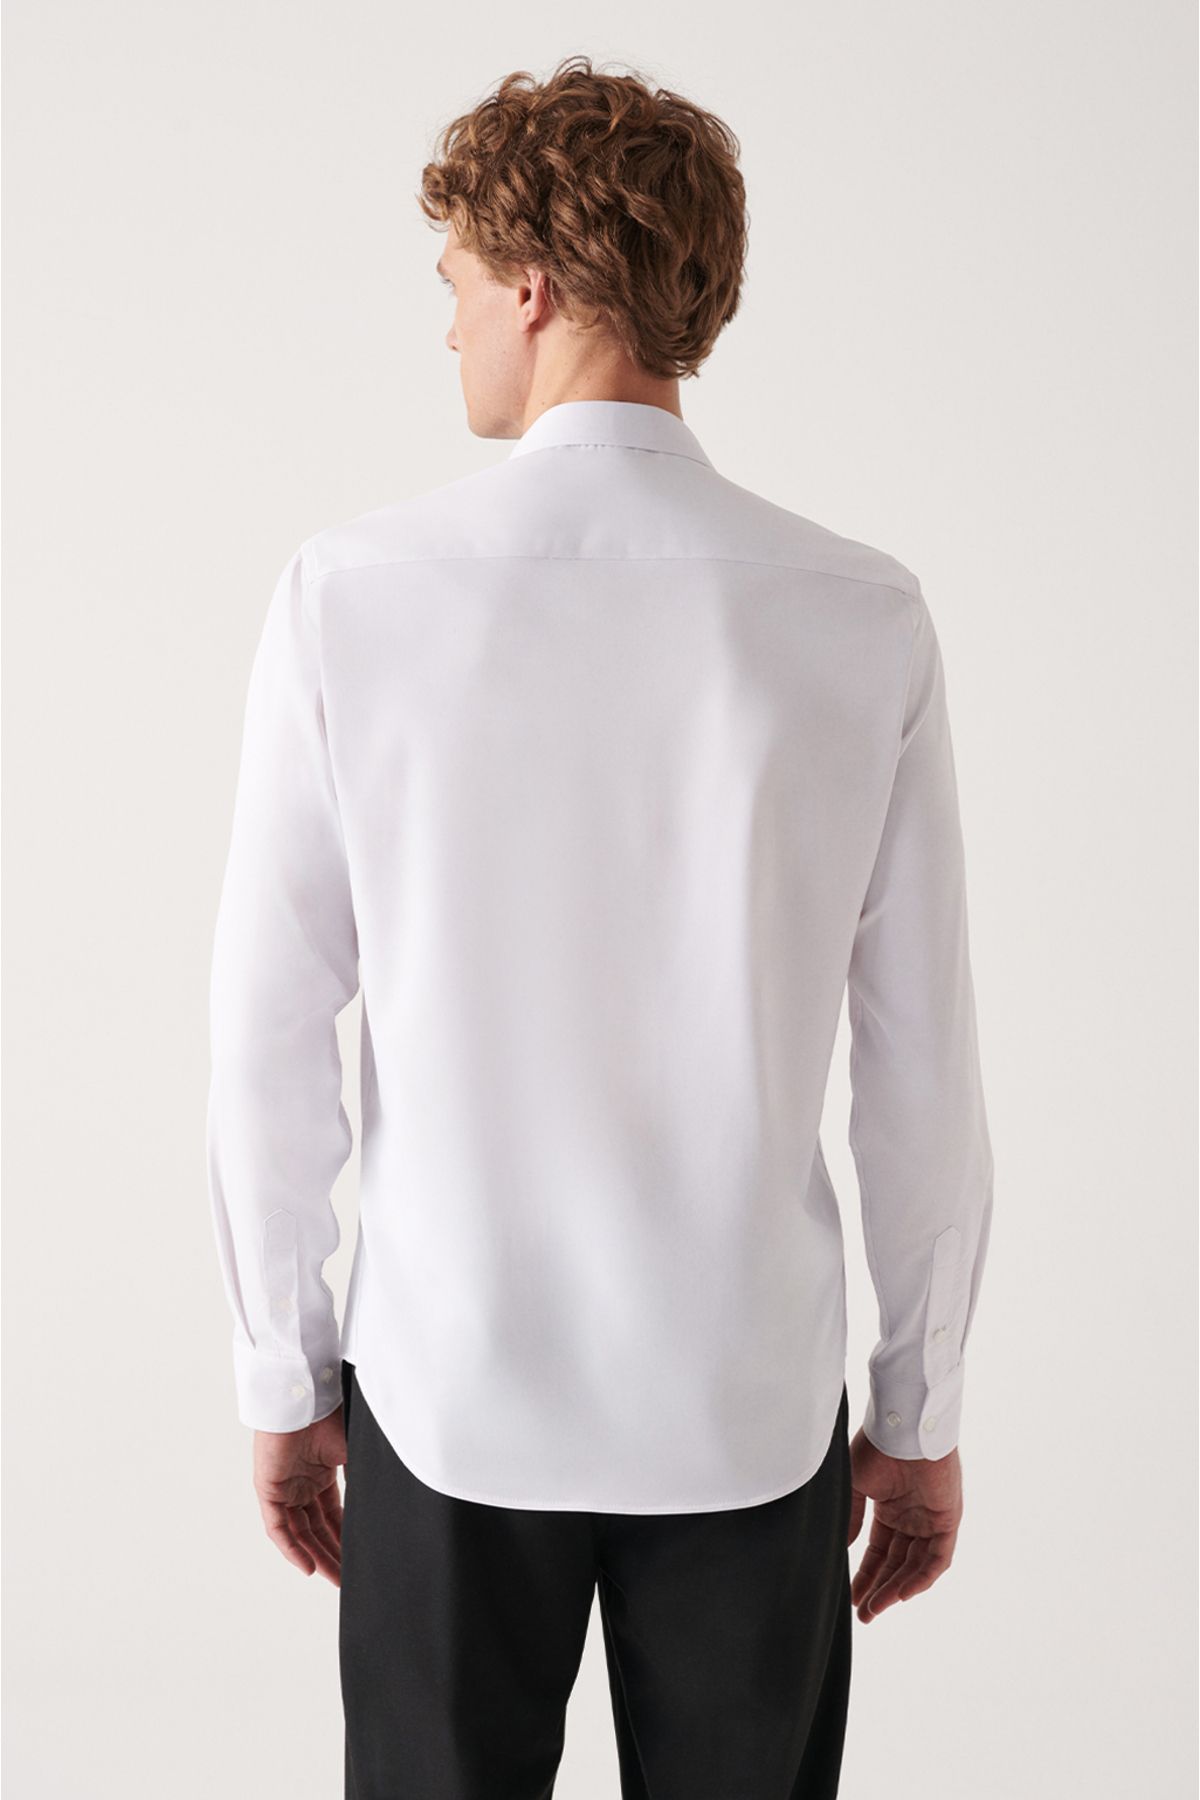 Avva سفر چین و چروک سفید مردانه پیراهن برش باریک E002005